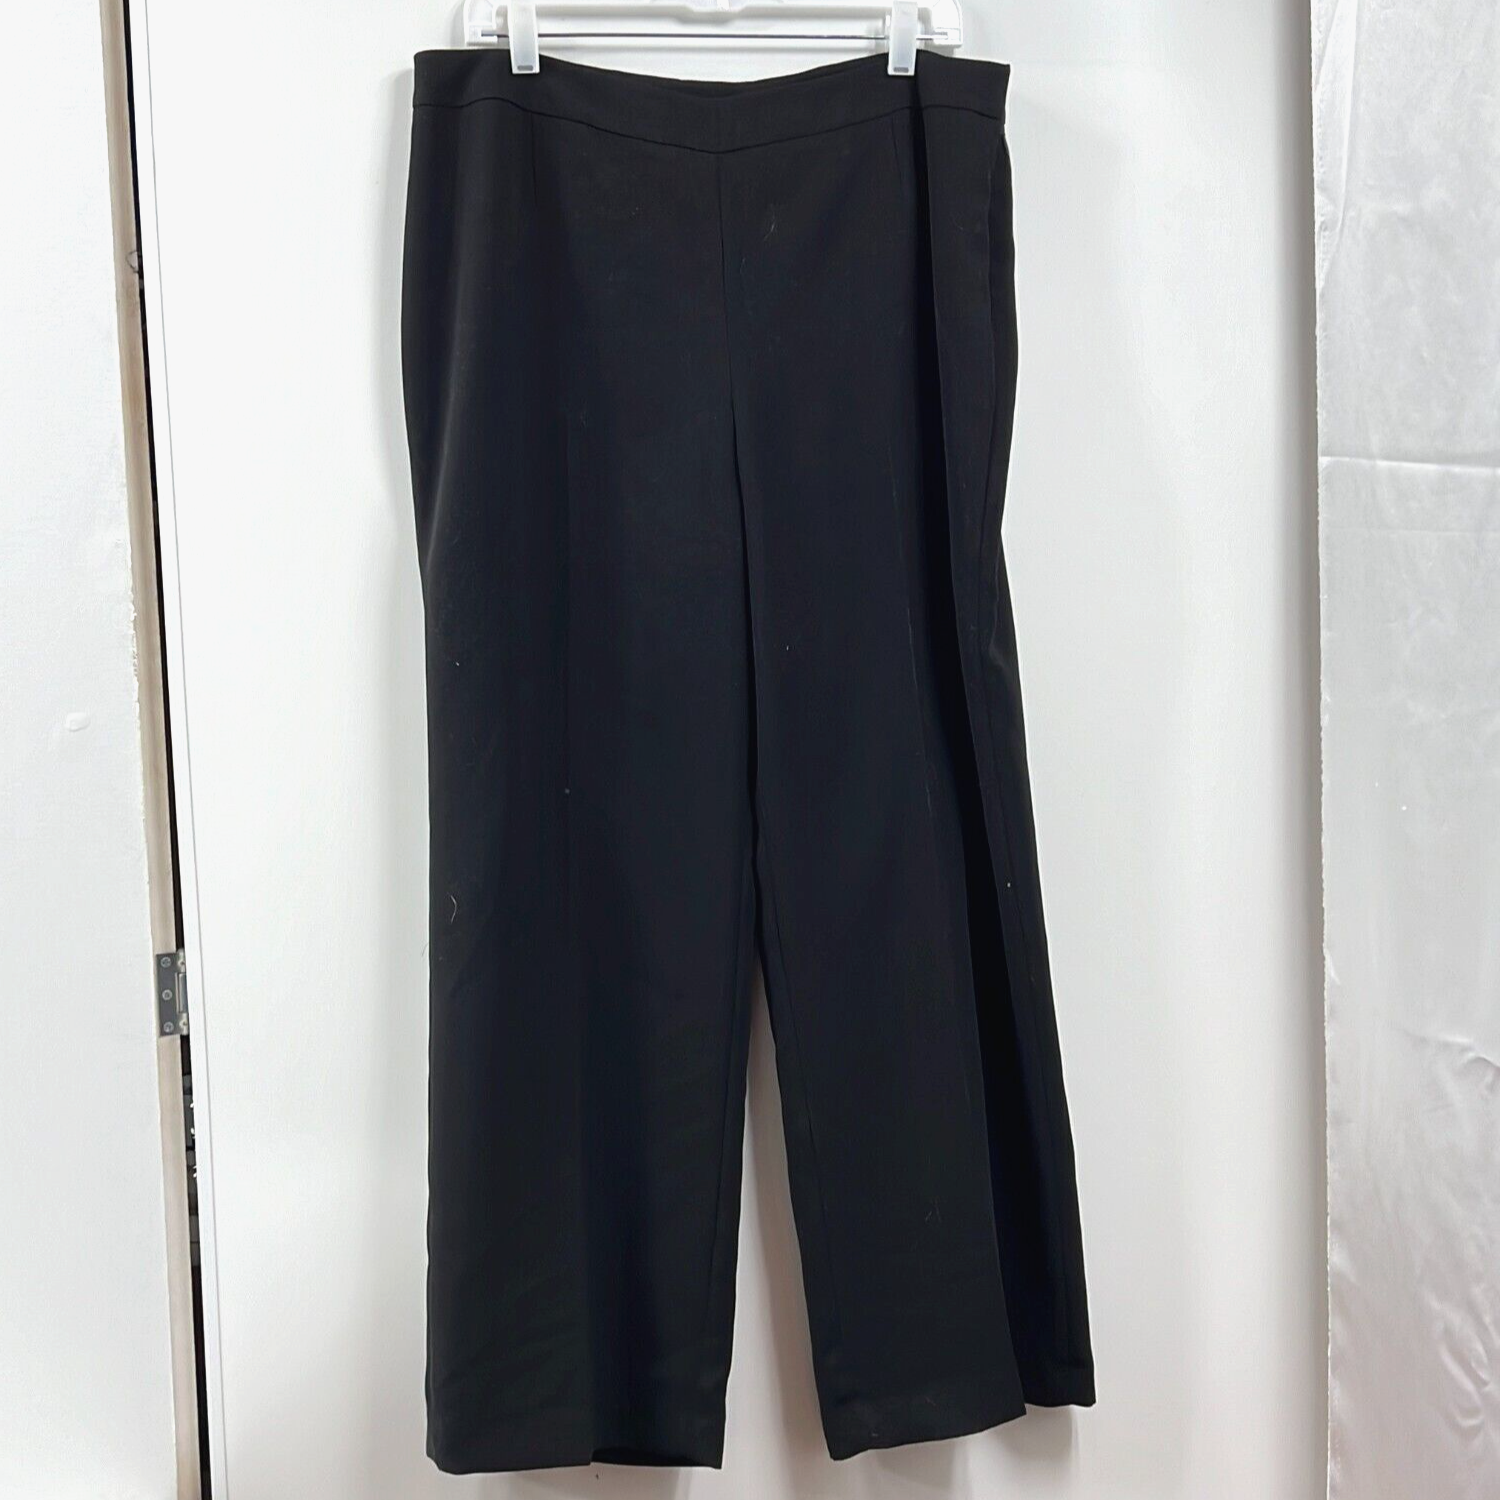 NWT Le Suit Women's Black Long Sleeve Single Breasted Two Piece Pant Suit Sz 14P